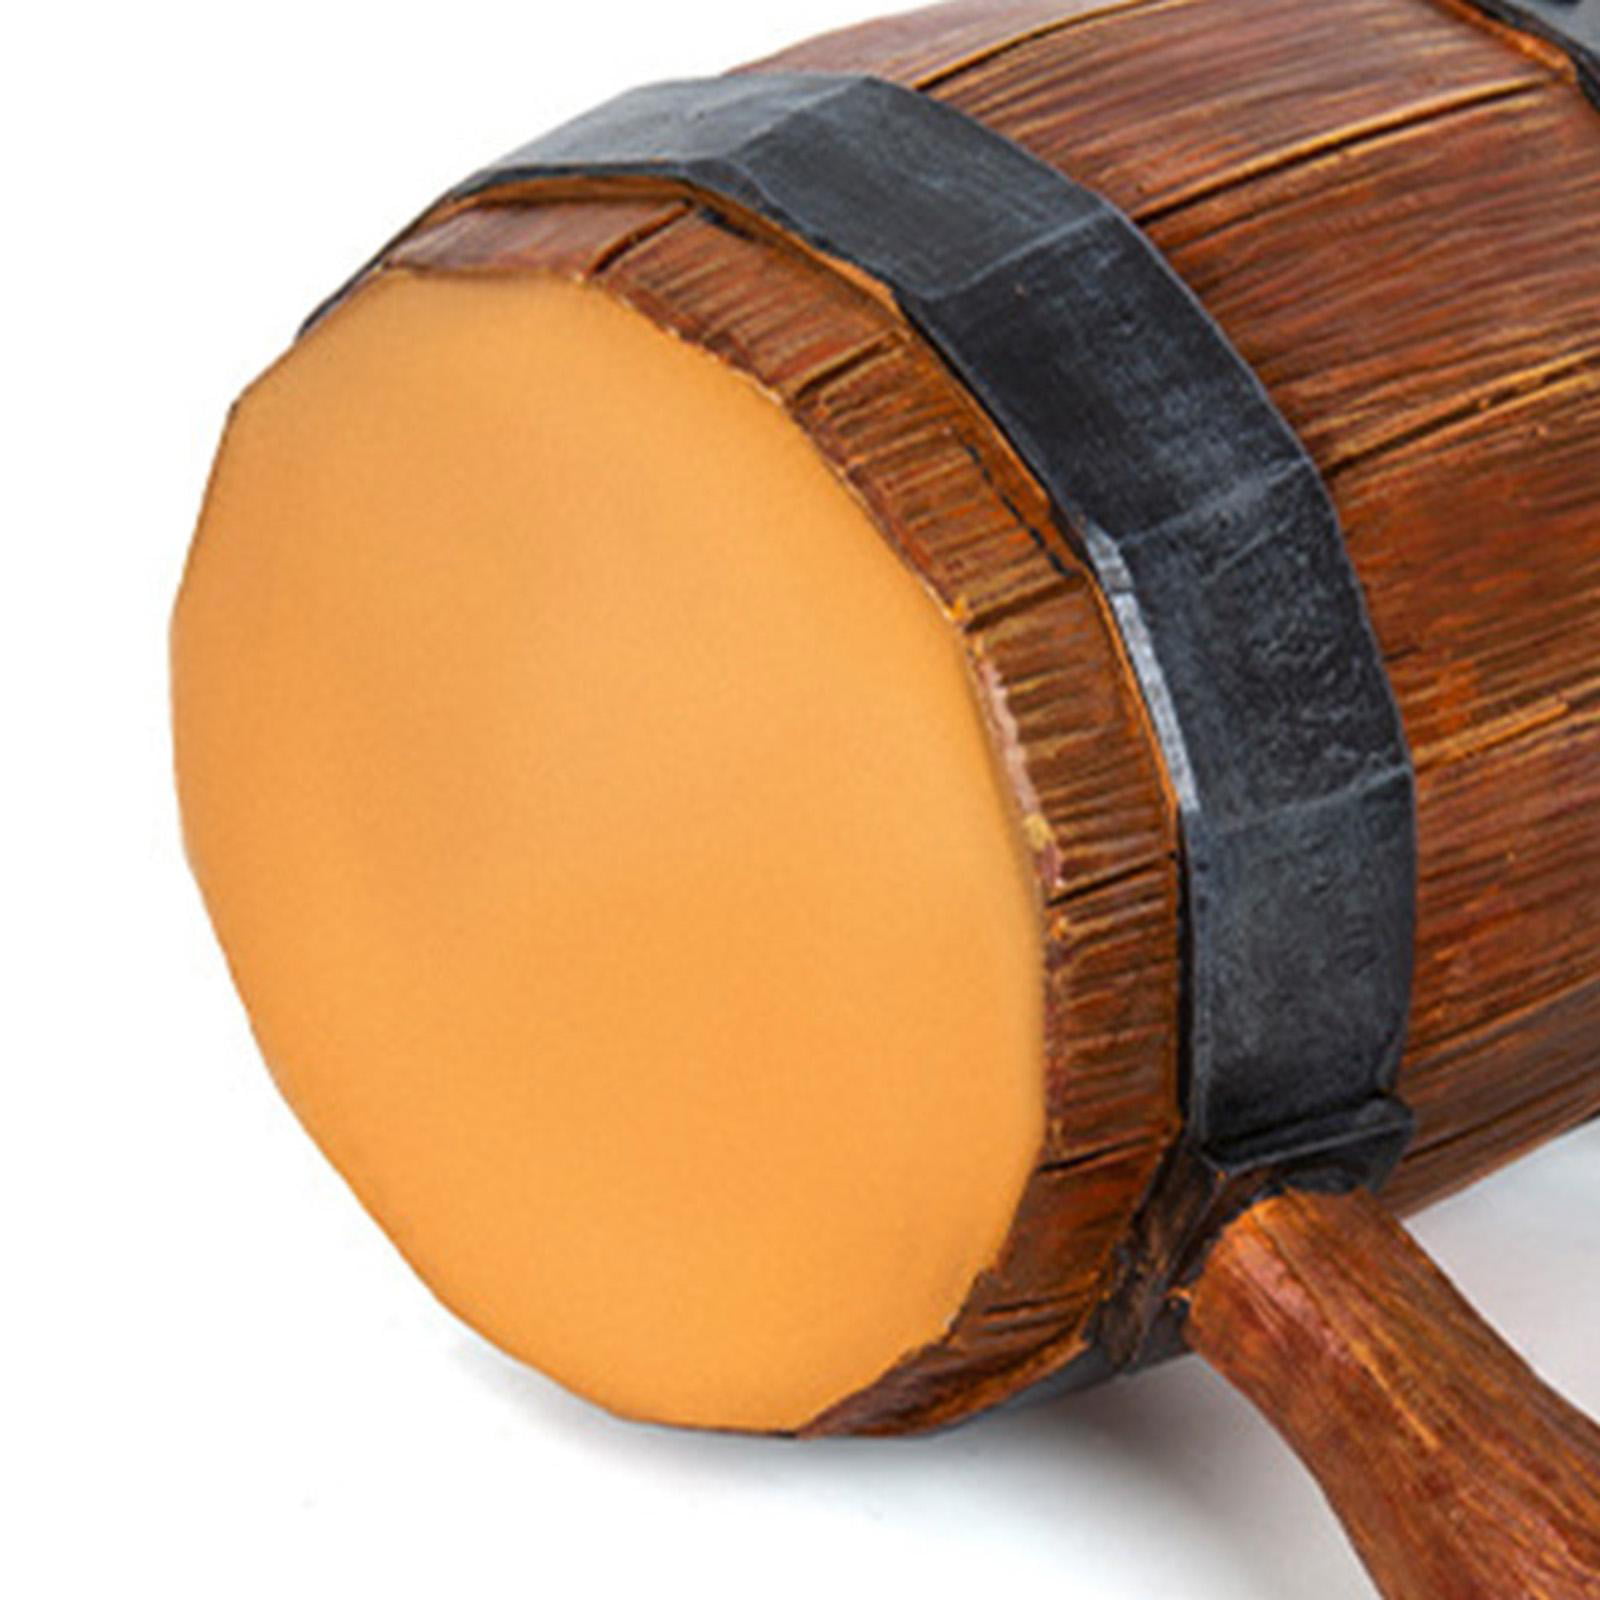 Barrel Design Dark Wood Tea Cup - World Tea Directory